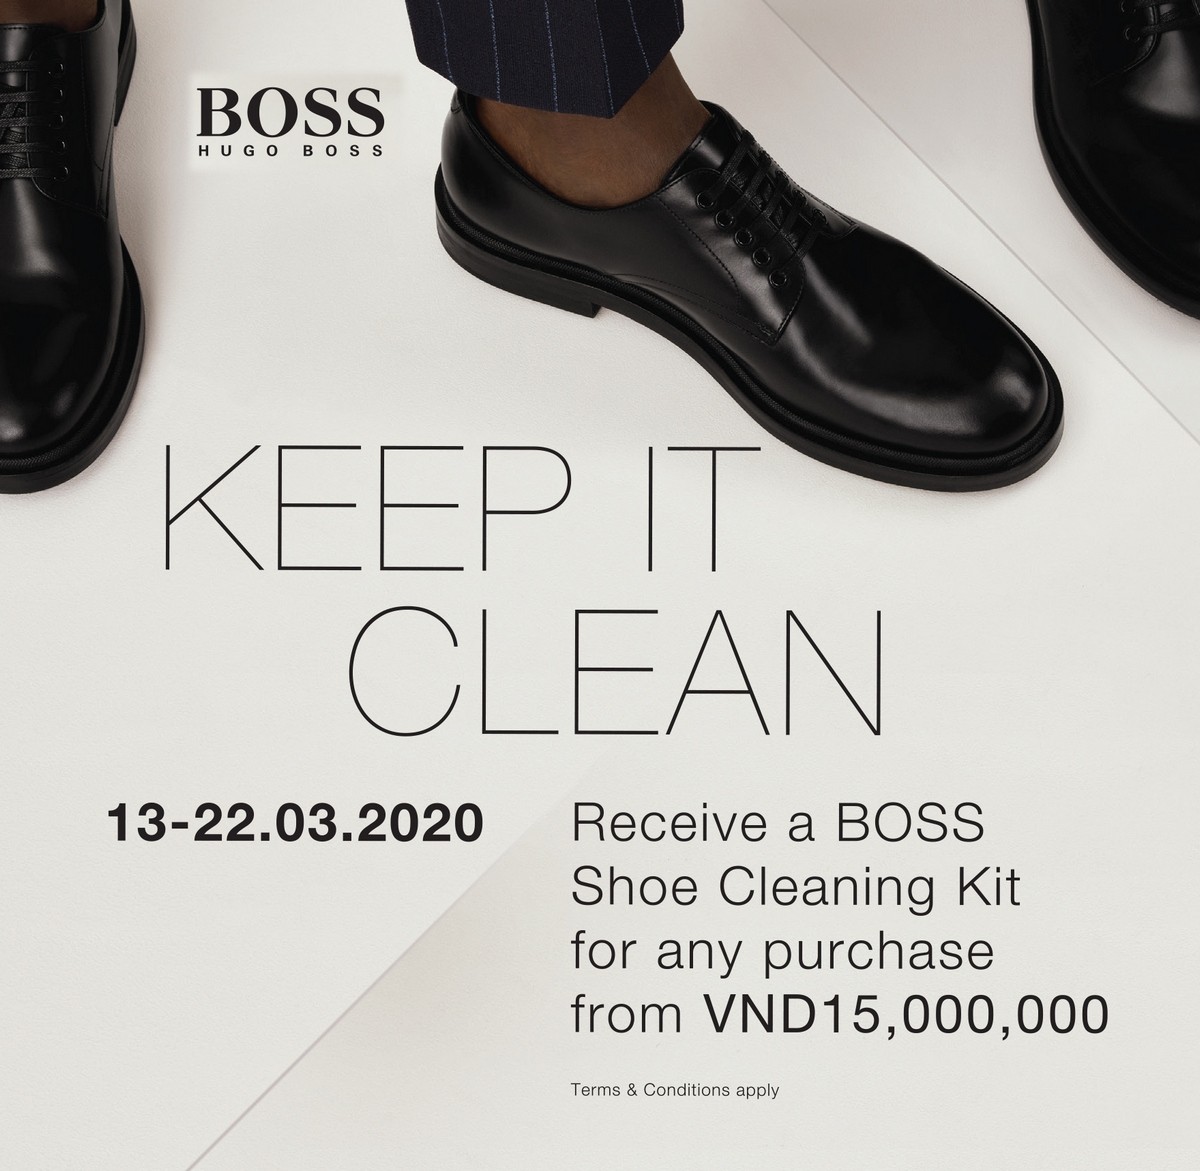 ‘Keep It Clean’ Cùng Boss 1